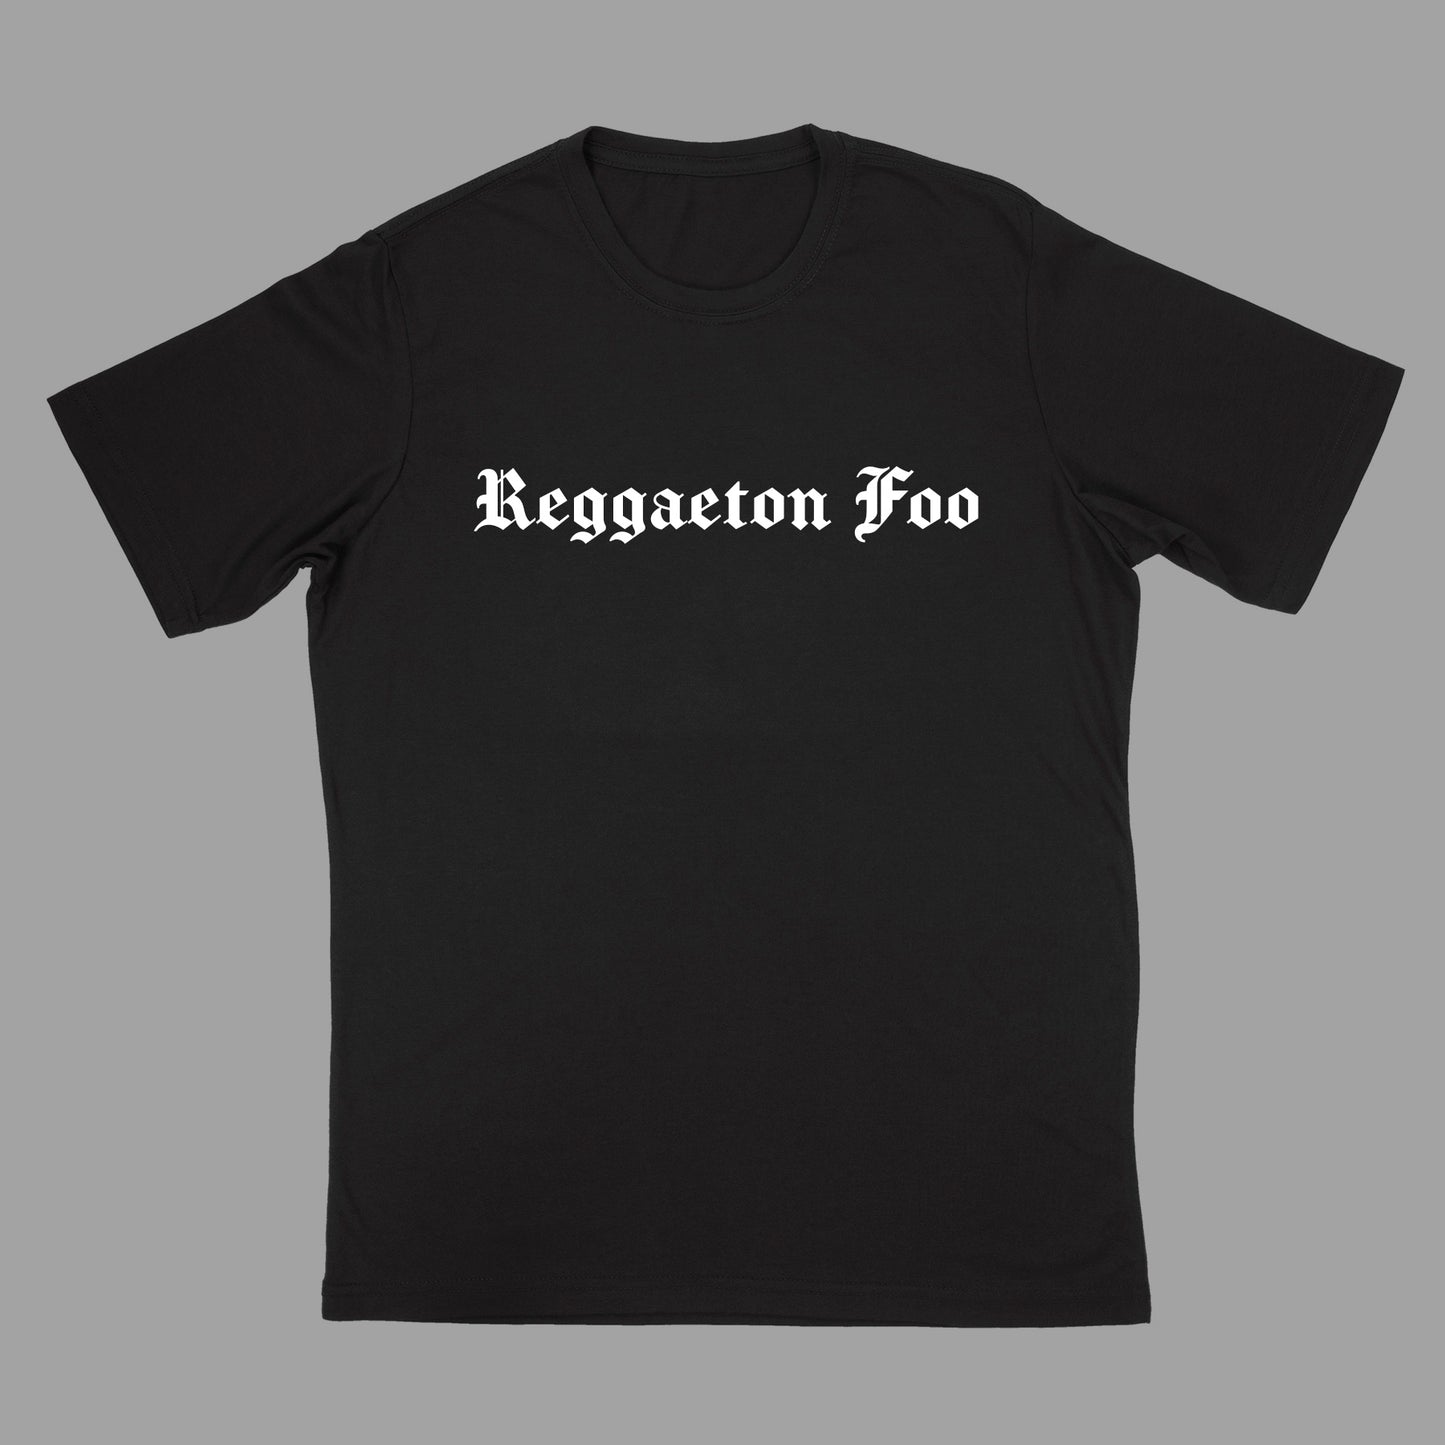 Reggaeton Foo